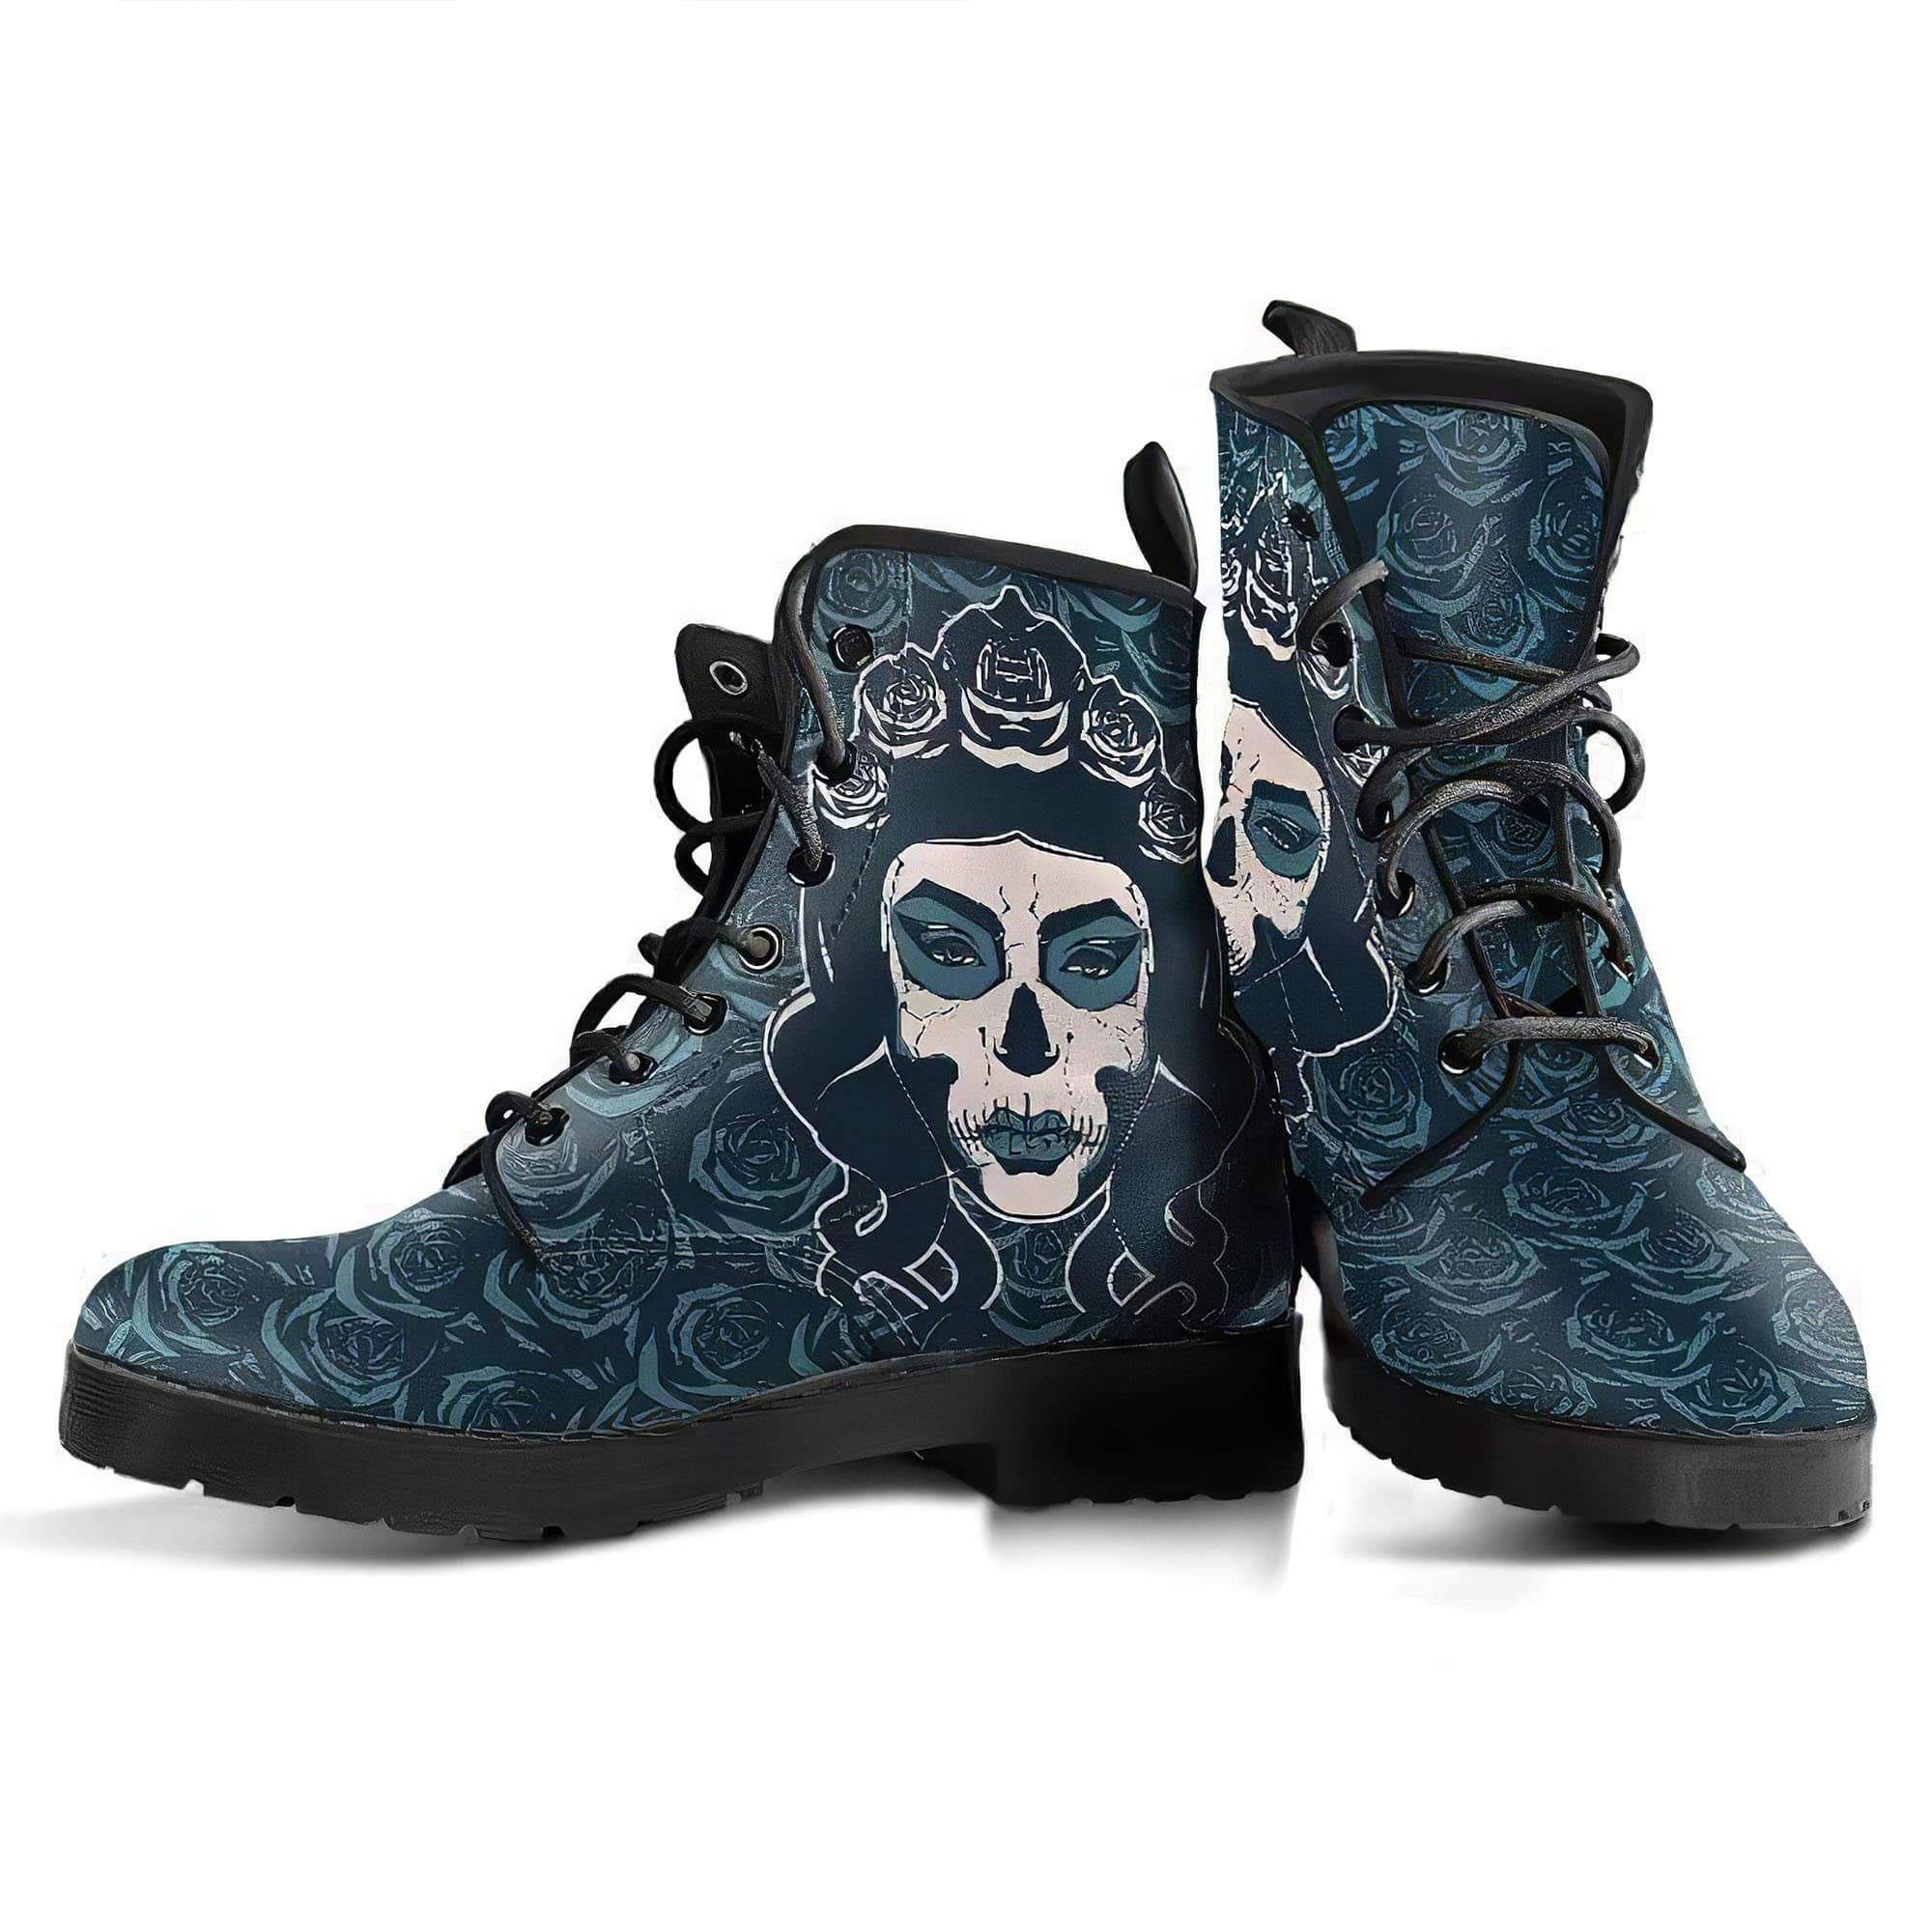 sugar-skull-4-women-s-boots-vegan-friendly-leather-women-s-leather-boots-12051953909821.jpg